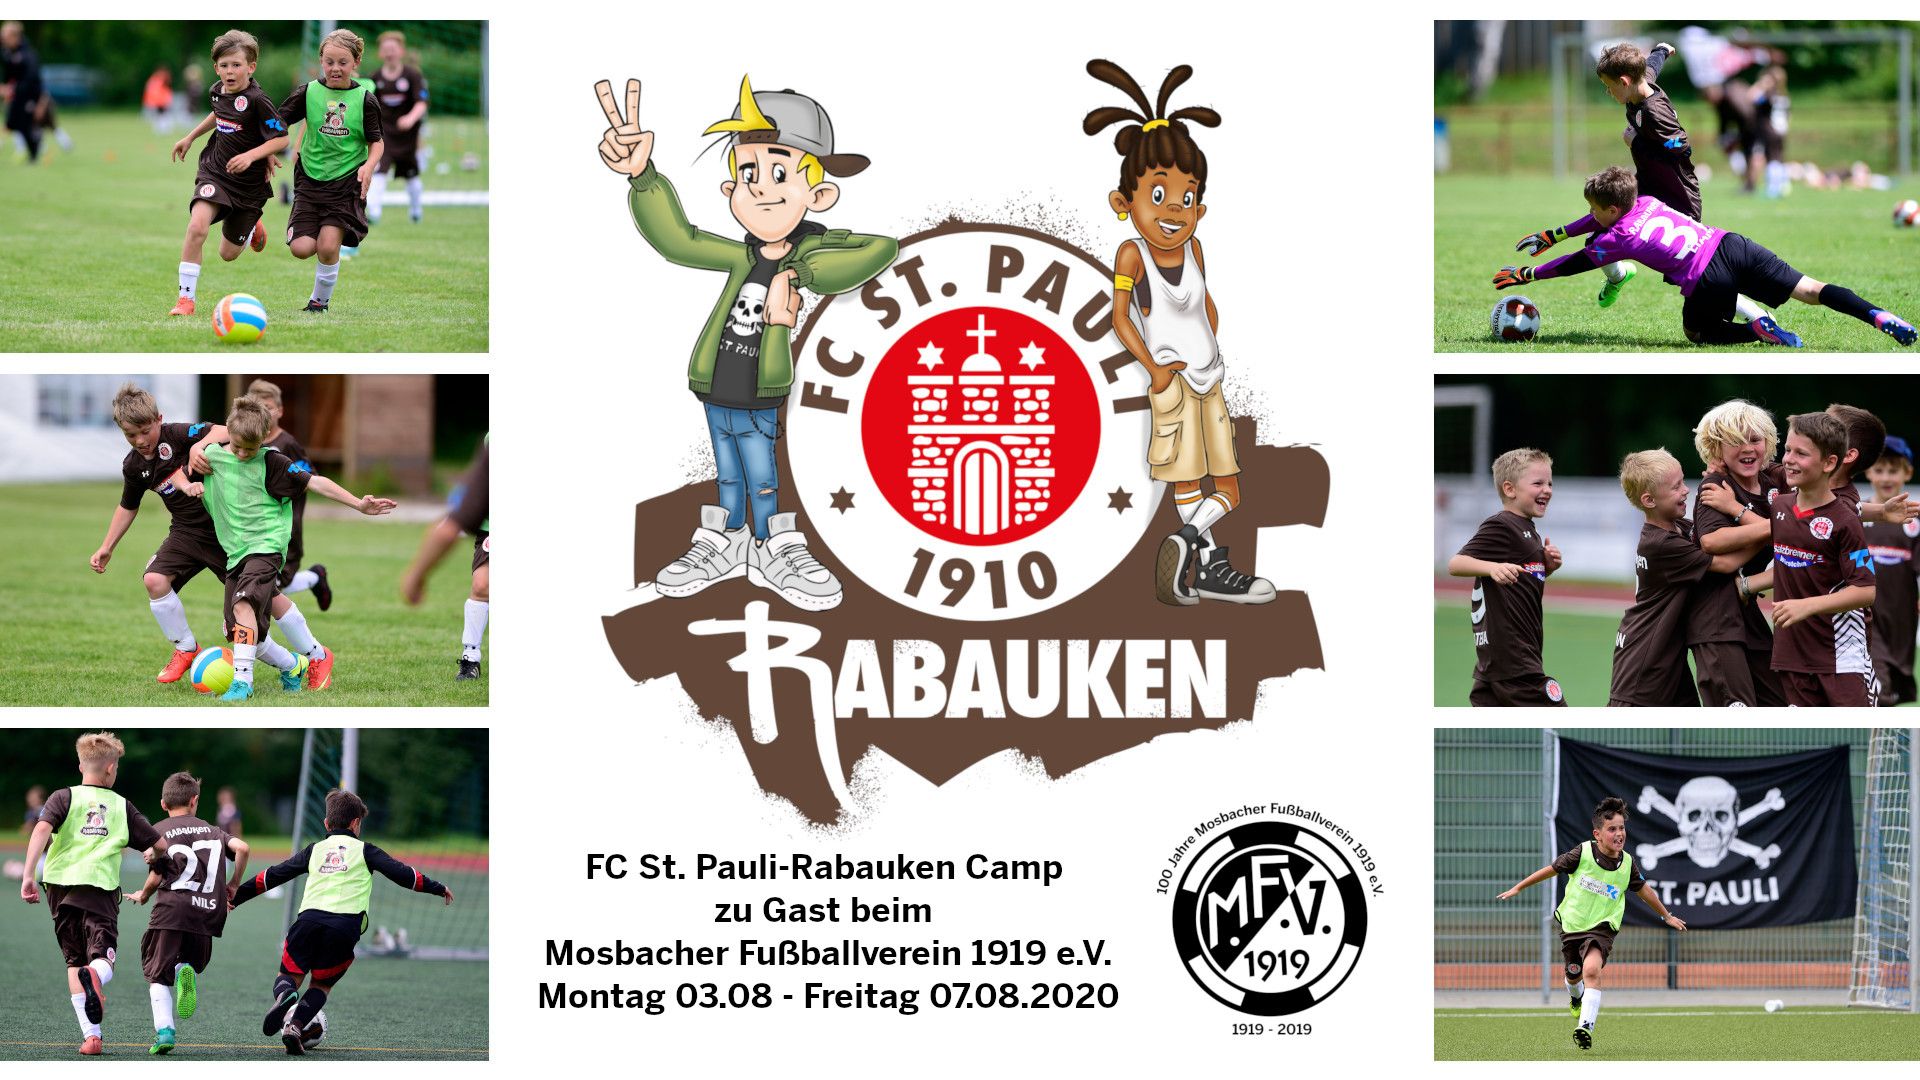  FC St Pauli Hintergrundbild 1920x1080. FC St. Pauli Rabauken Camp Vom 03.08. 07.08.2020 Beim MFV